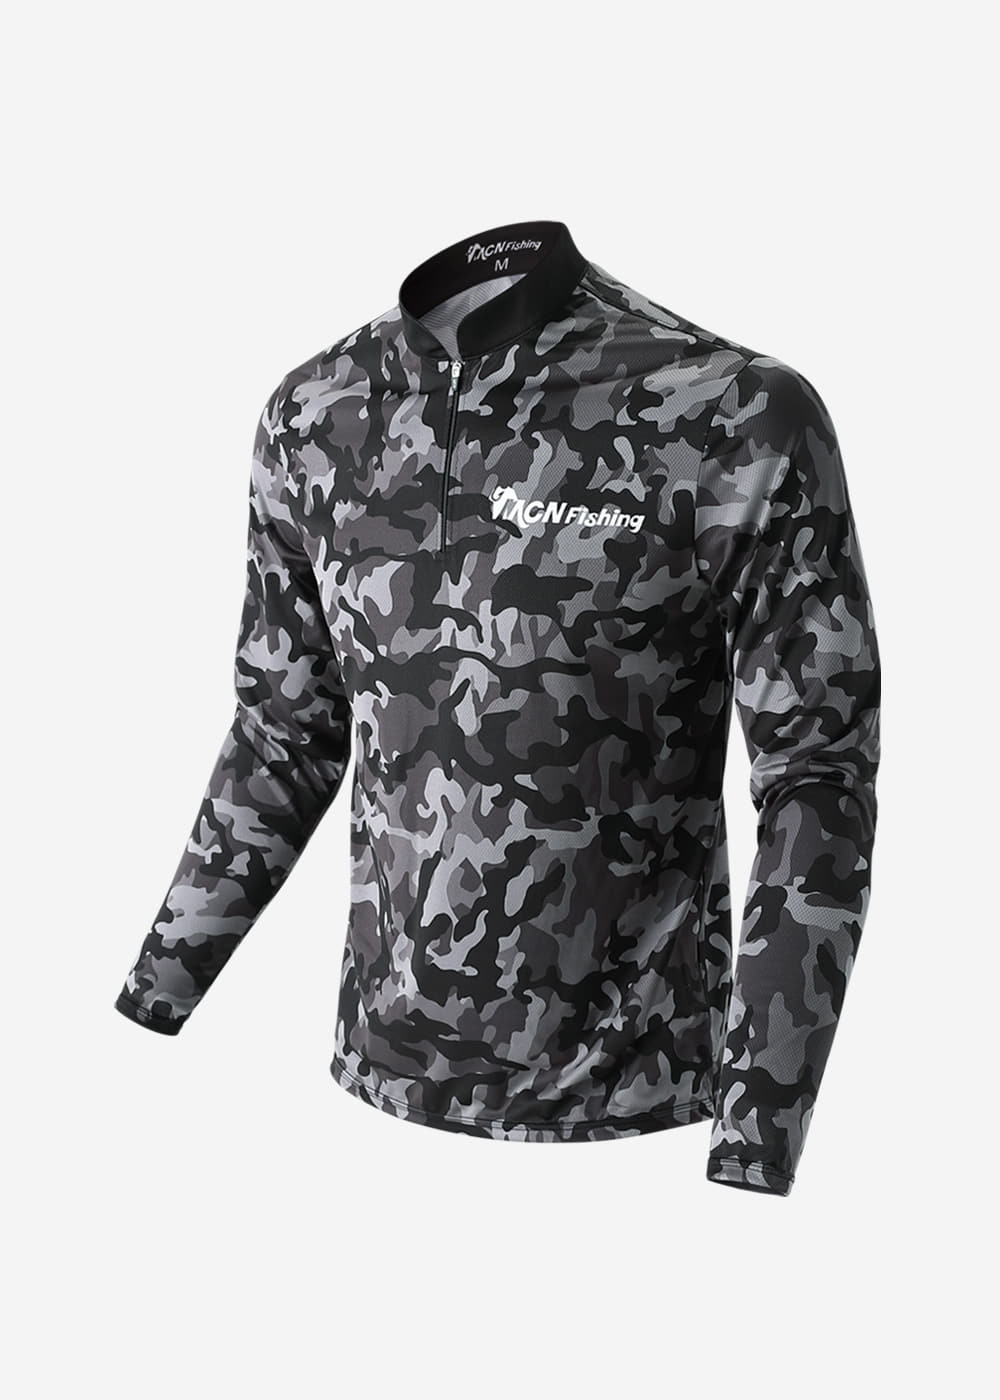 mcnfishing[MFJL-Camouflage]mcn낚시단체복 카모플라주 져지낚시복 낚시의류 낚시토너먼트 낚시팀복반집업 티셔츠 기능성 아웃도어웨어